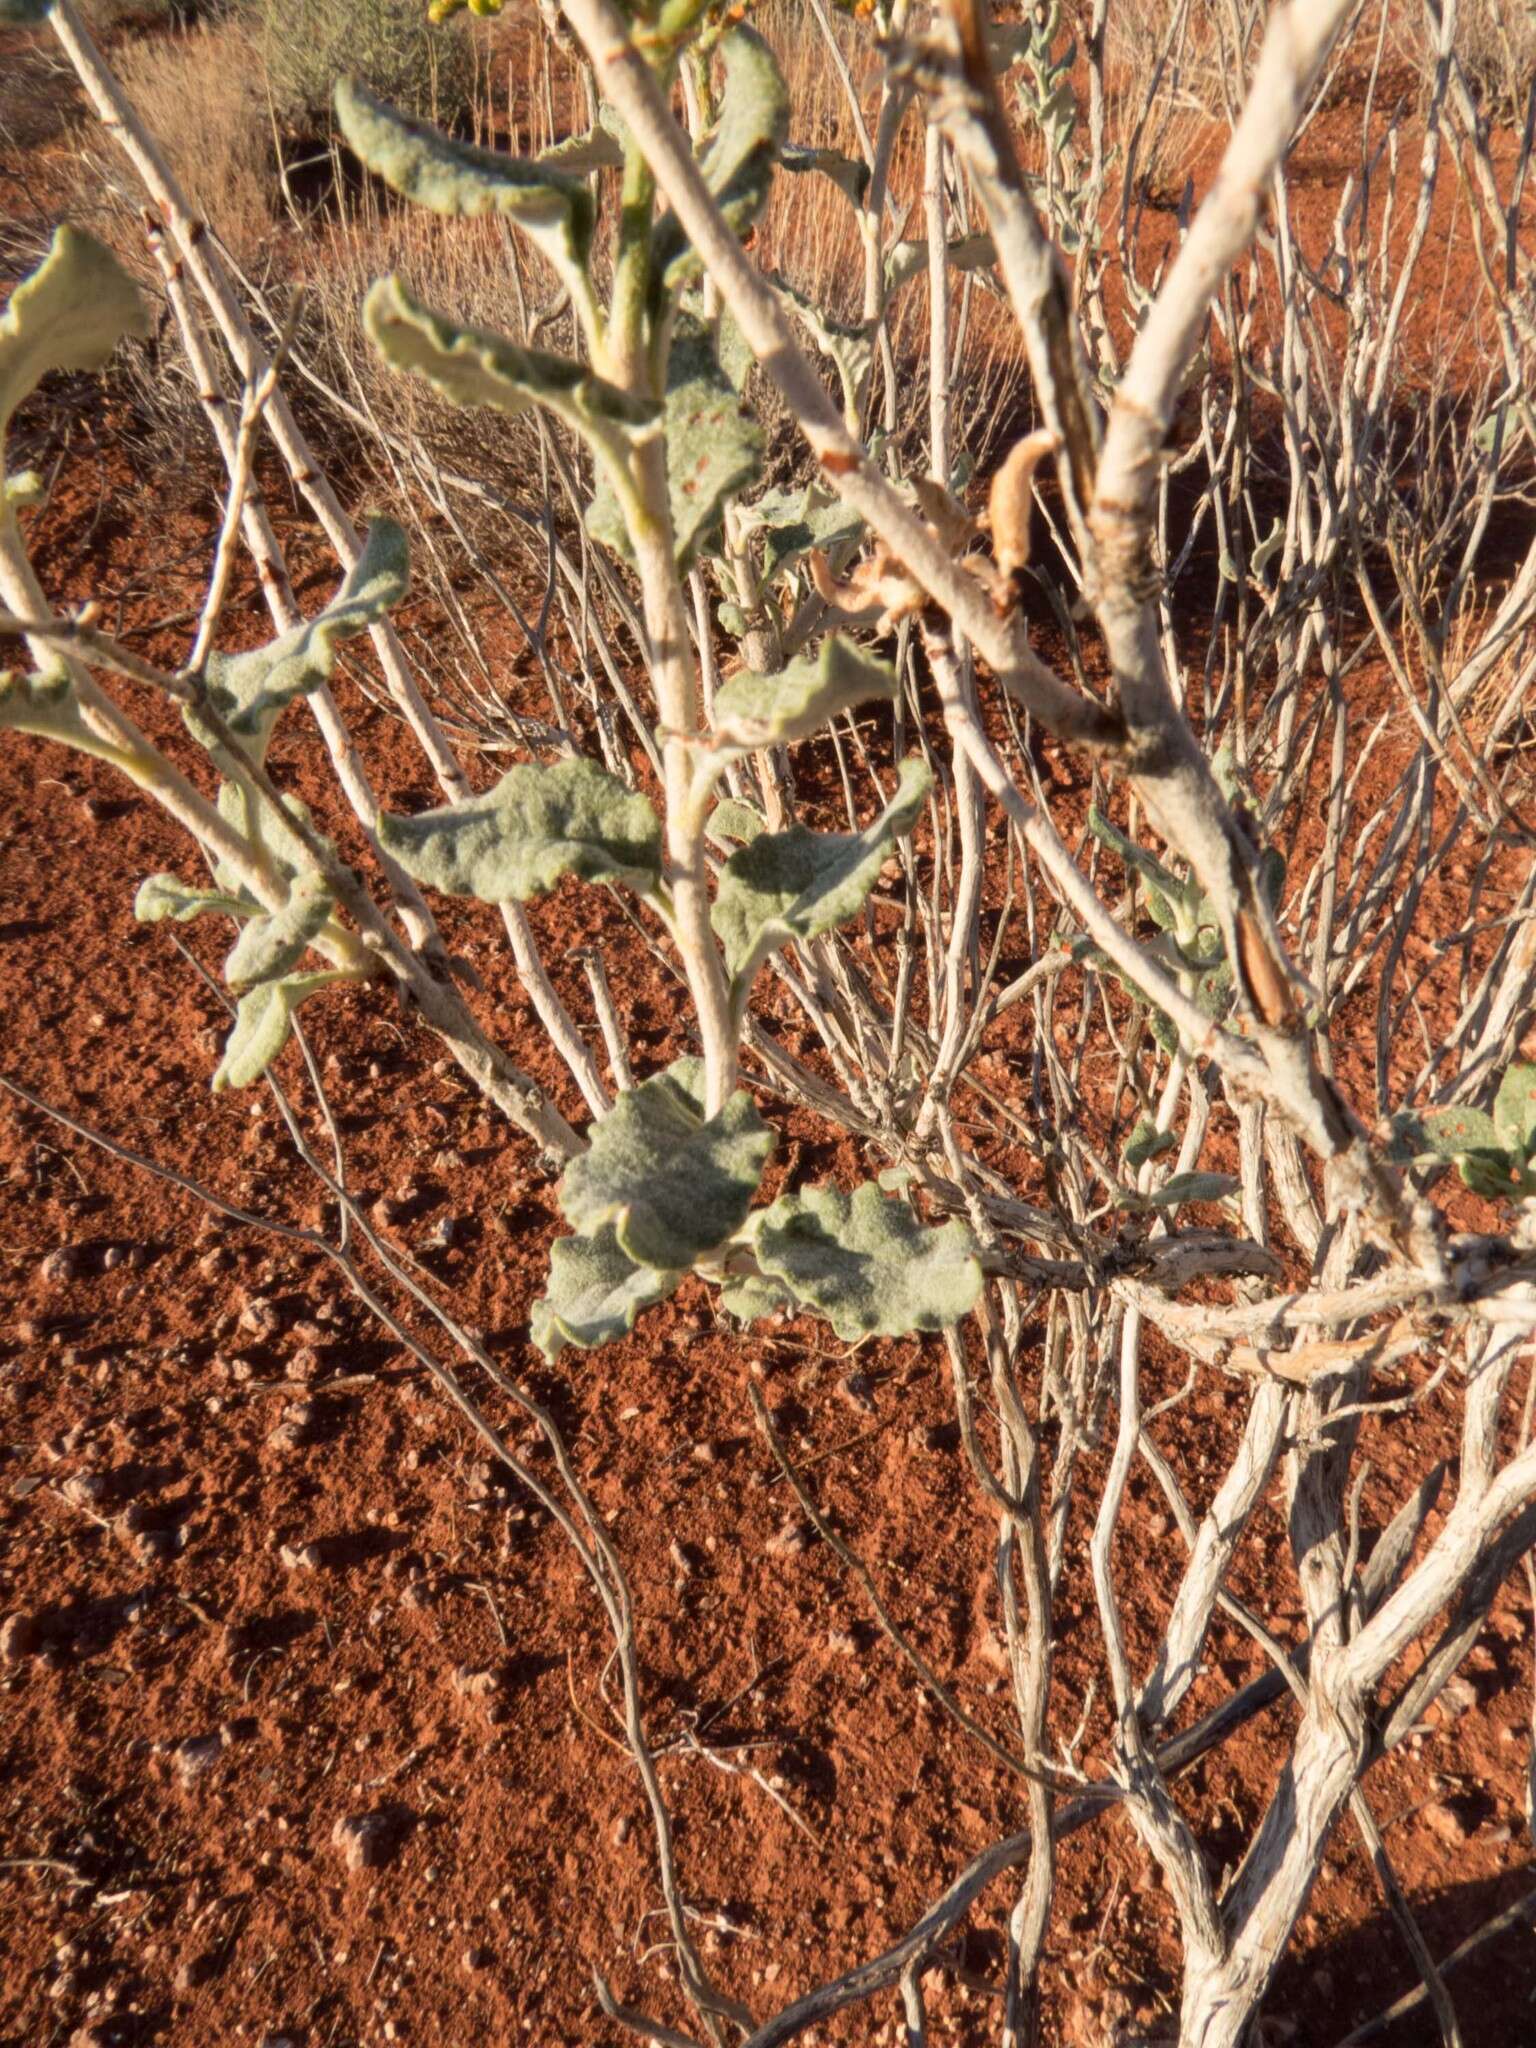 Image of crispleaf buckwheat